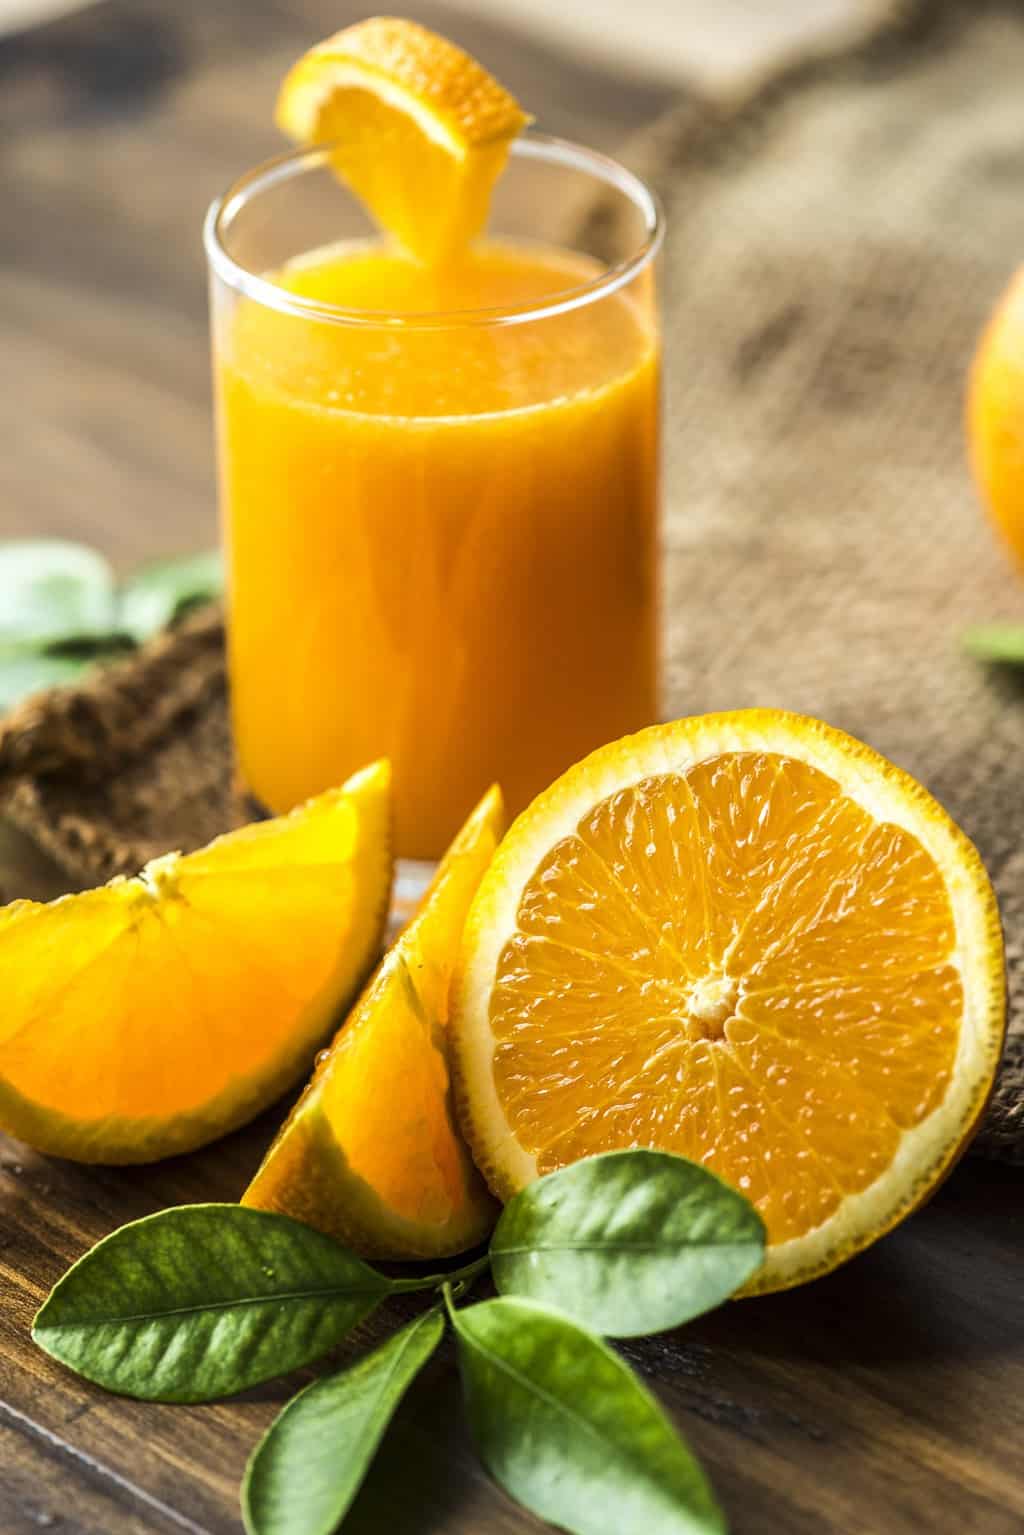 Oranges next to a glass of orange juice.